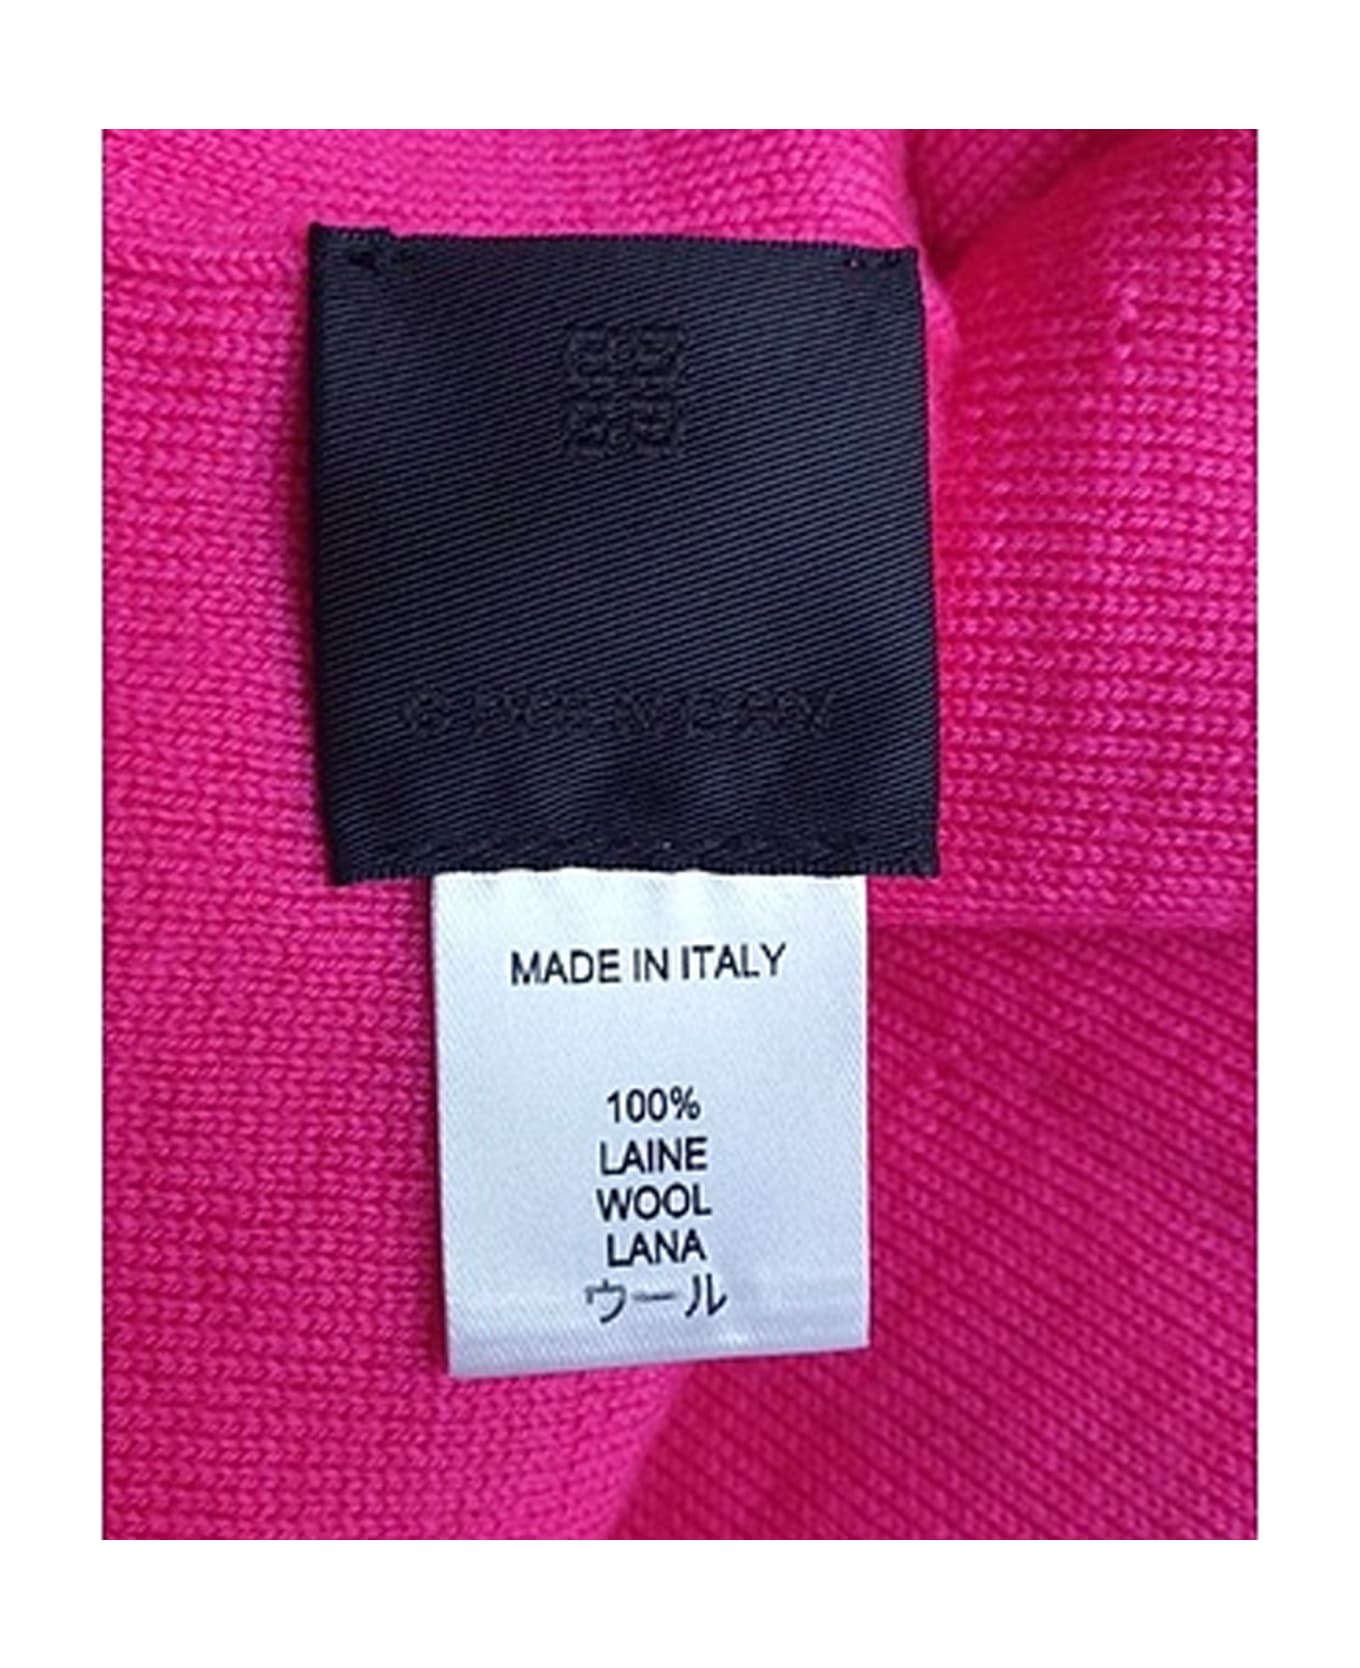 Givenchy Wool Logo Hat - Pink